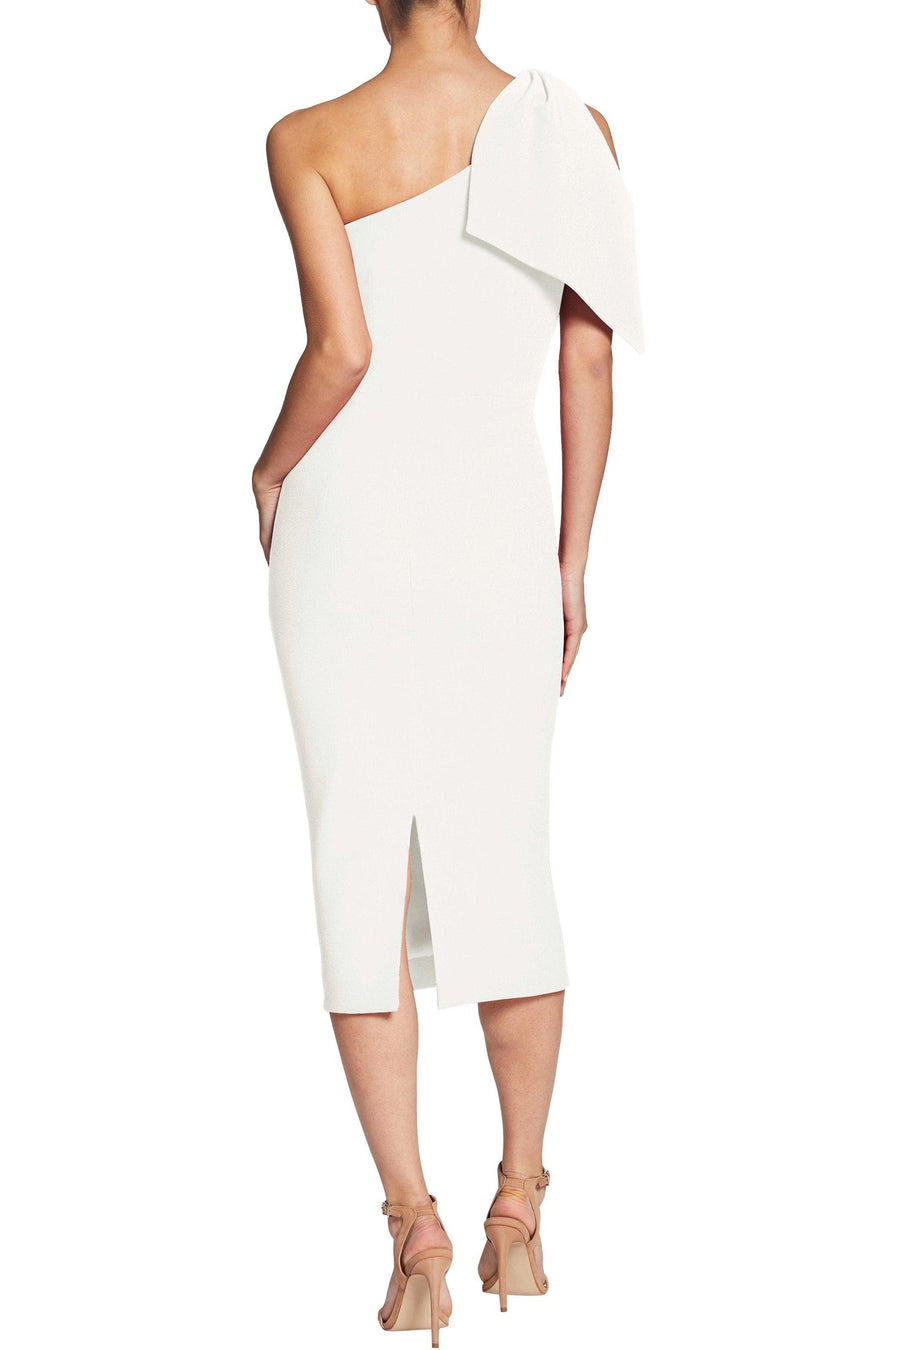 Tiffany Dress / OFF WHITE